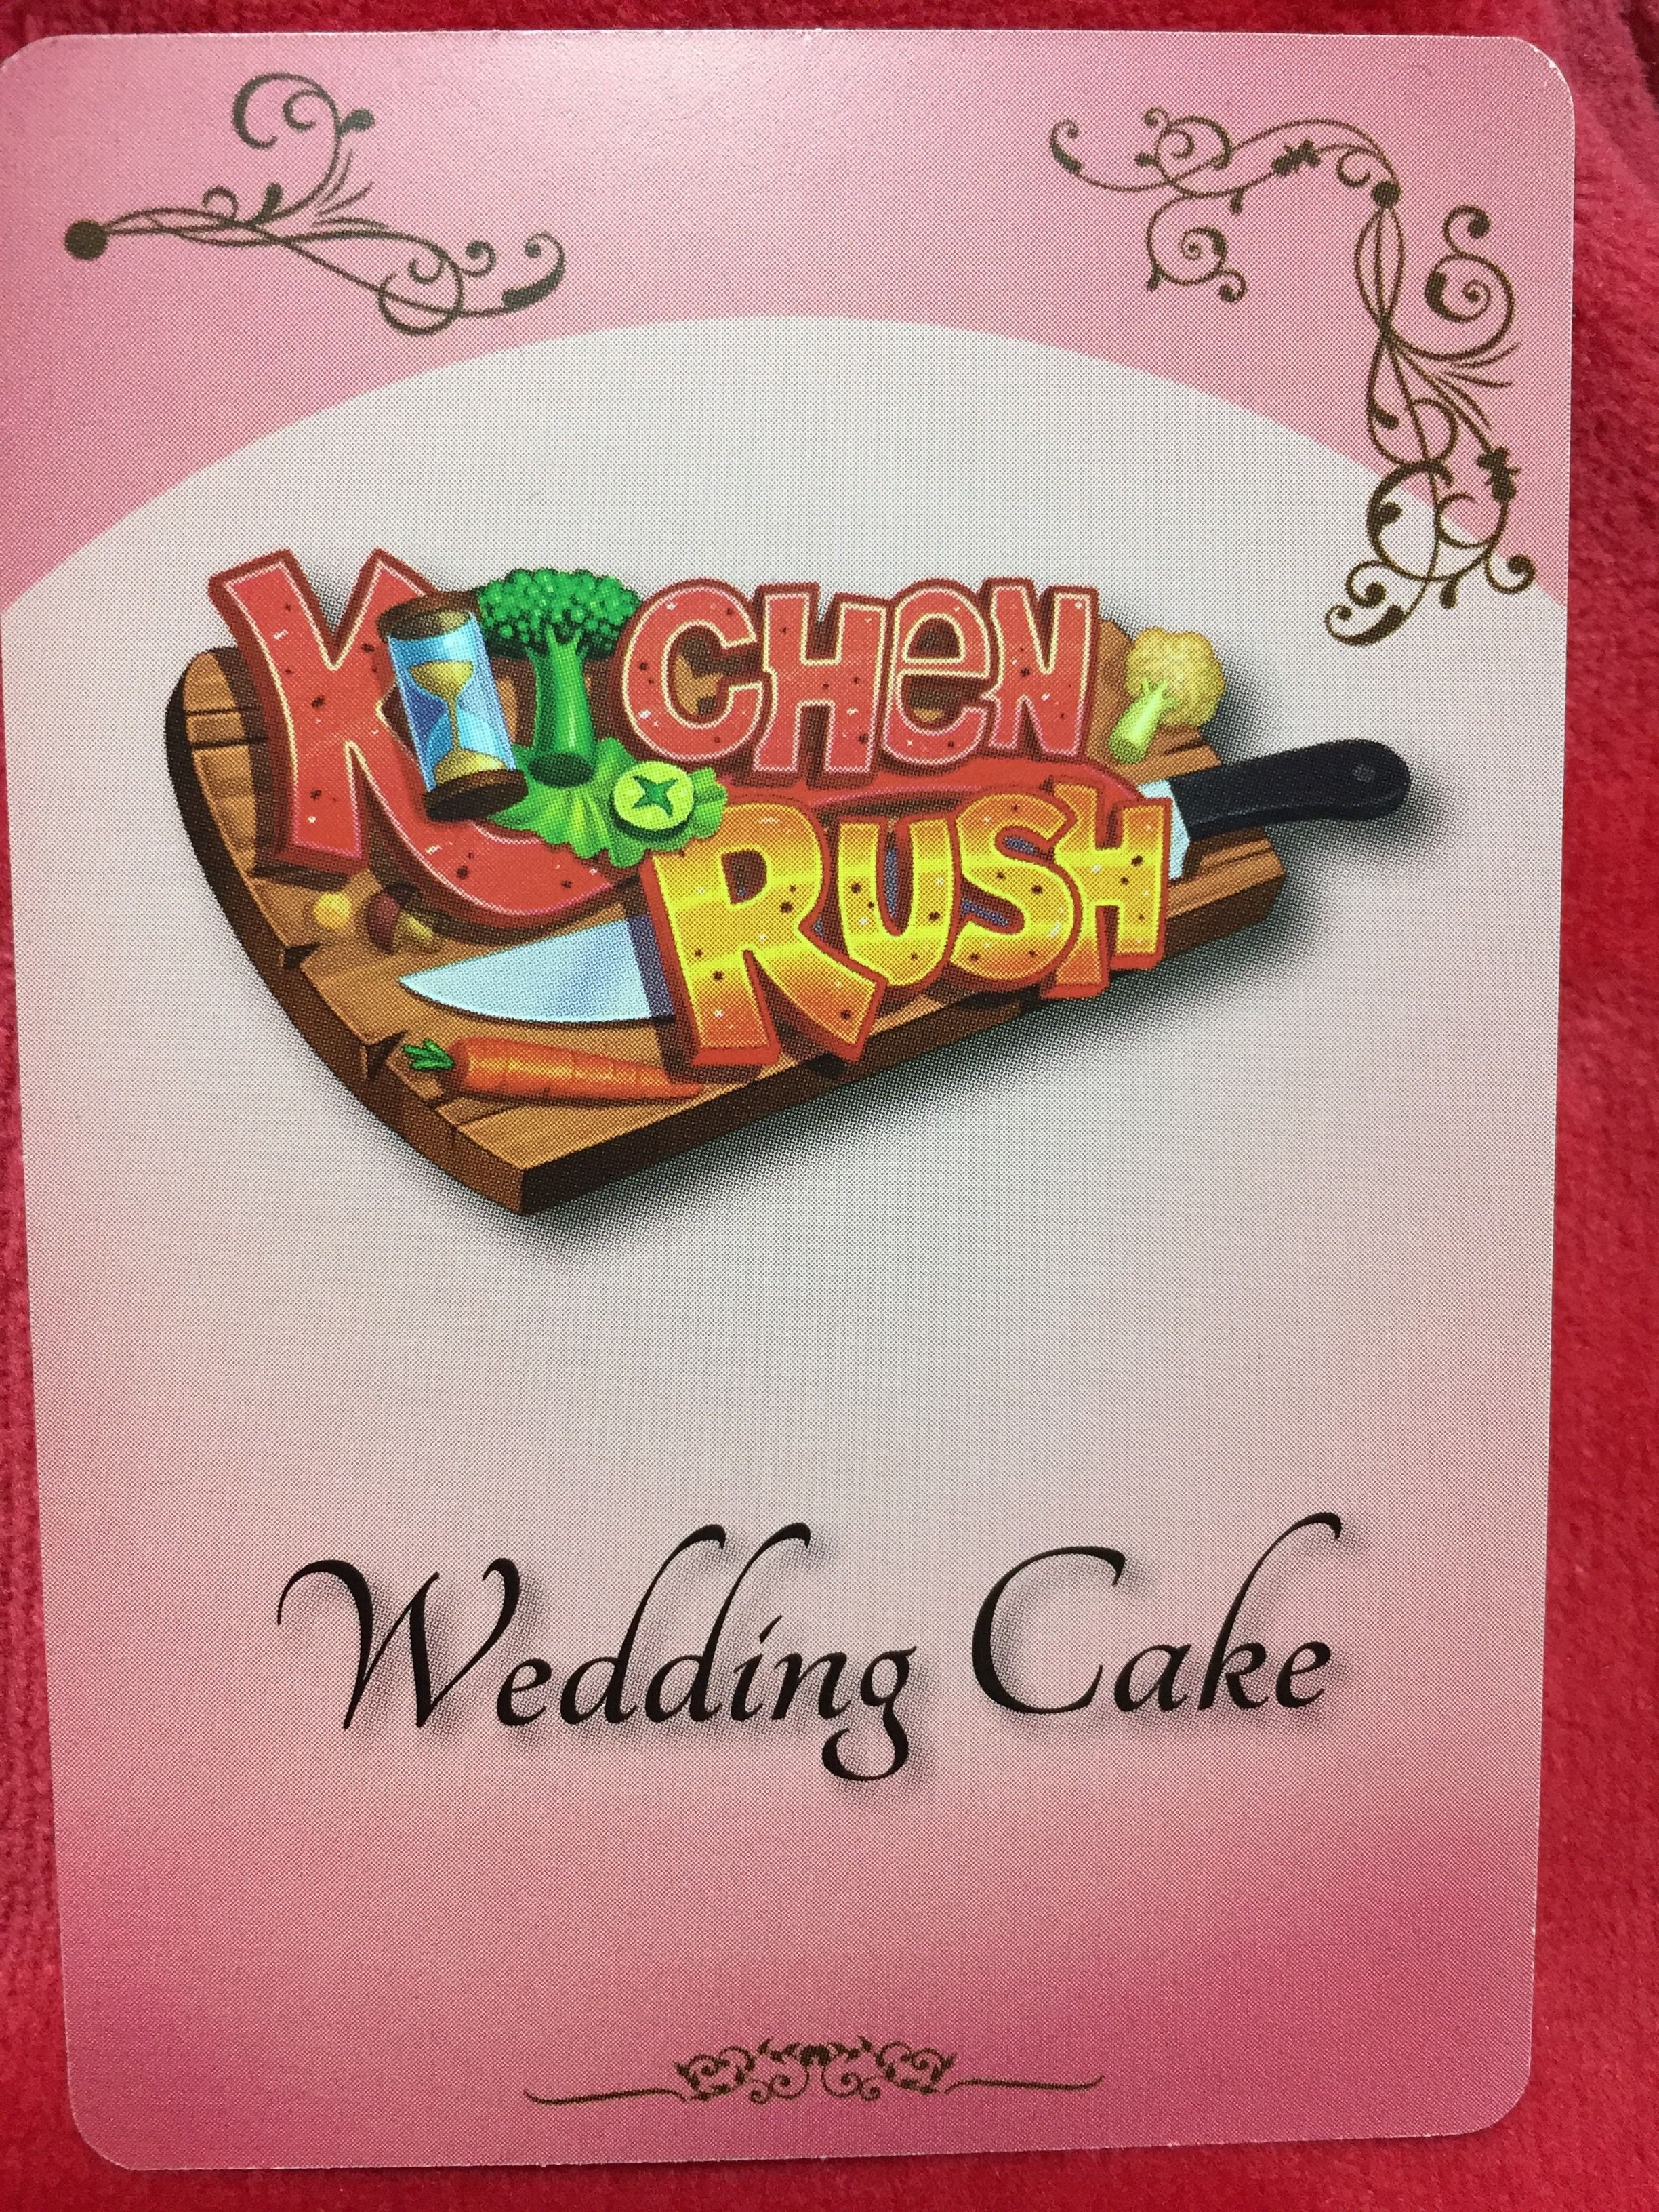 Kitchen Rush: Piece of Cake – The Wedding Cake